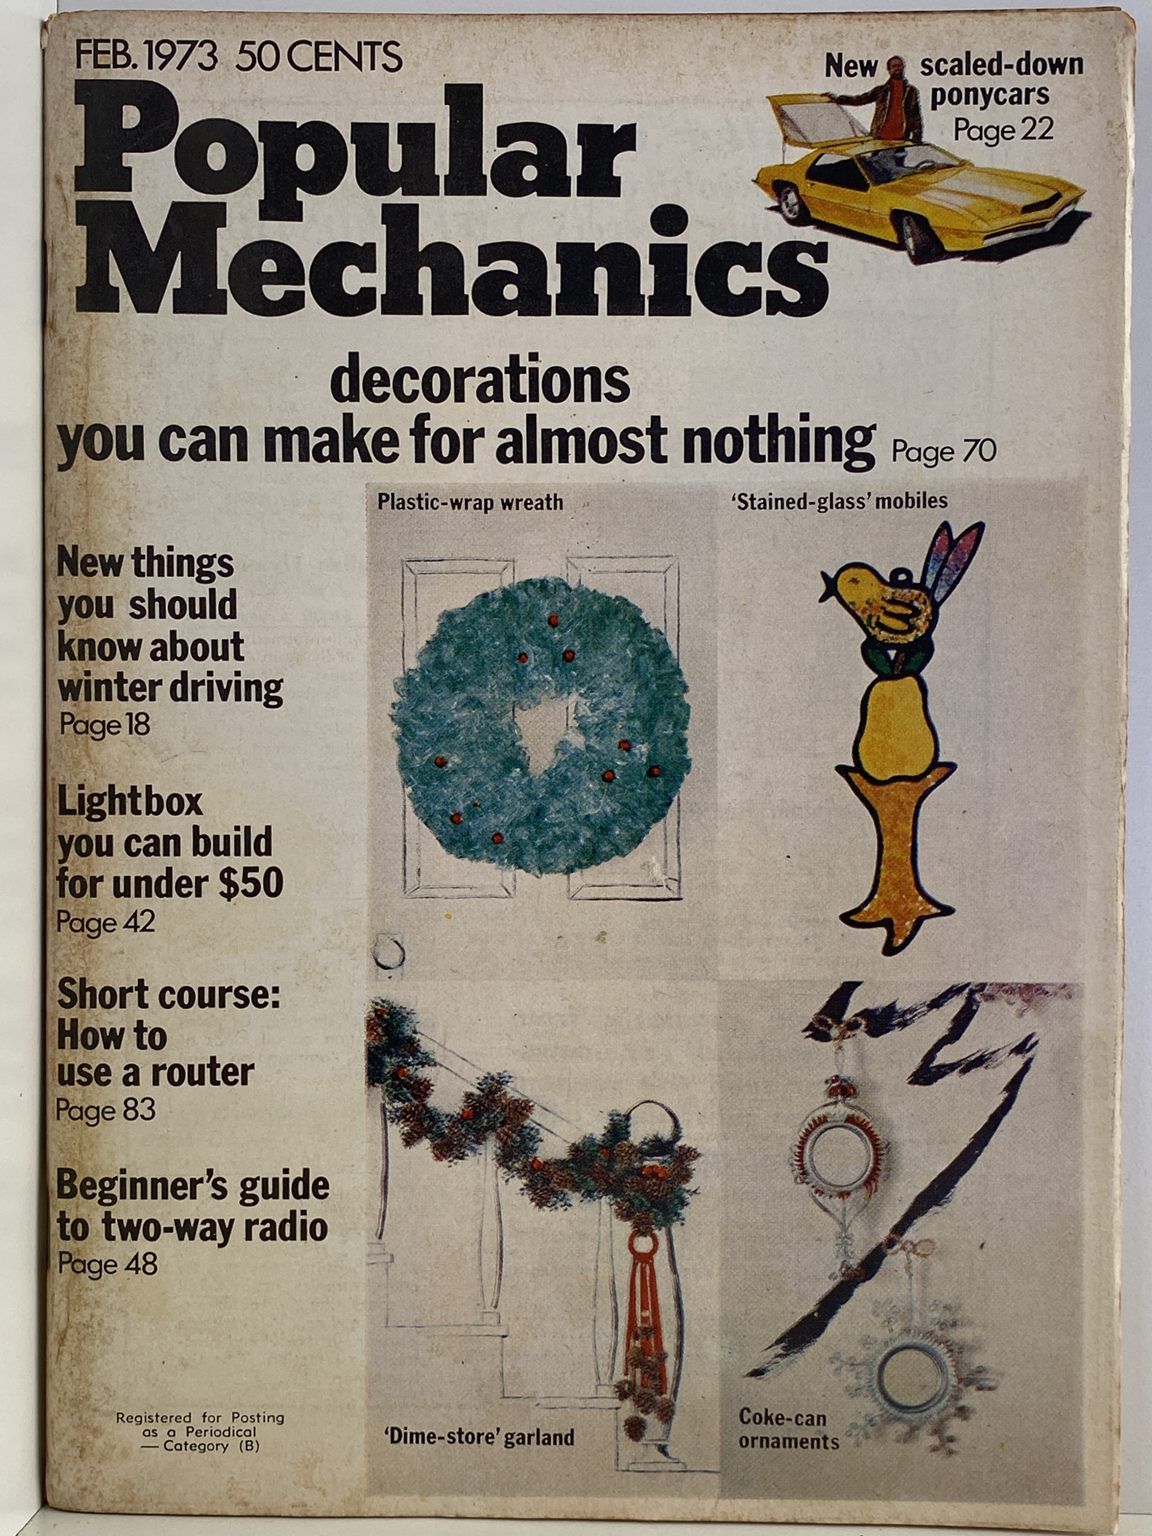 VINTAGE MAGAZINE: Popular Mechanics - Vol. 138, No. 6 - February 1973